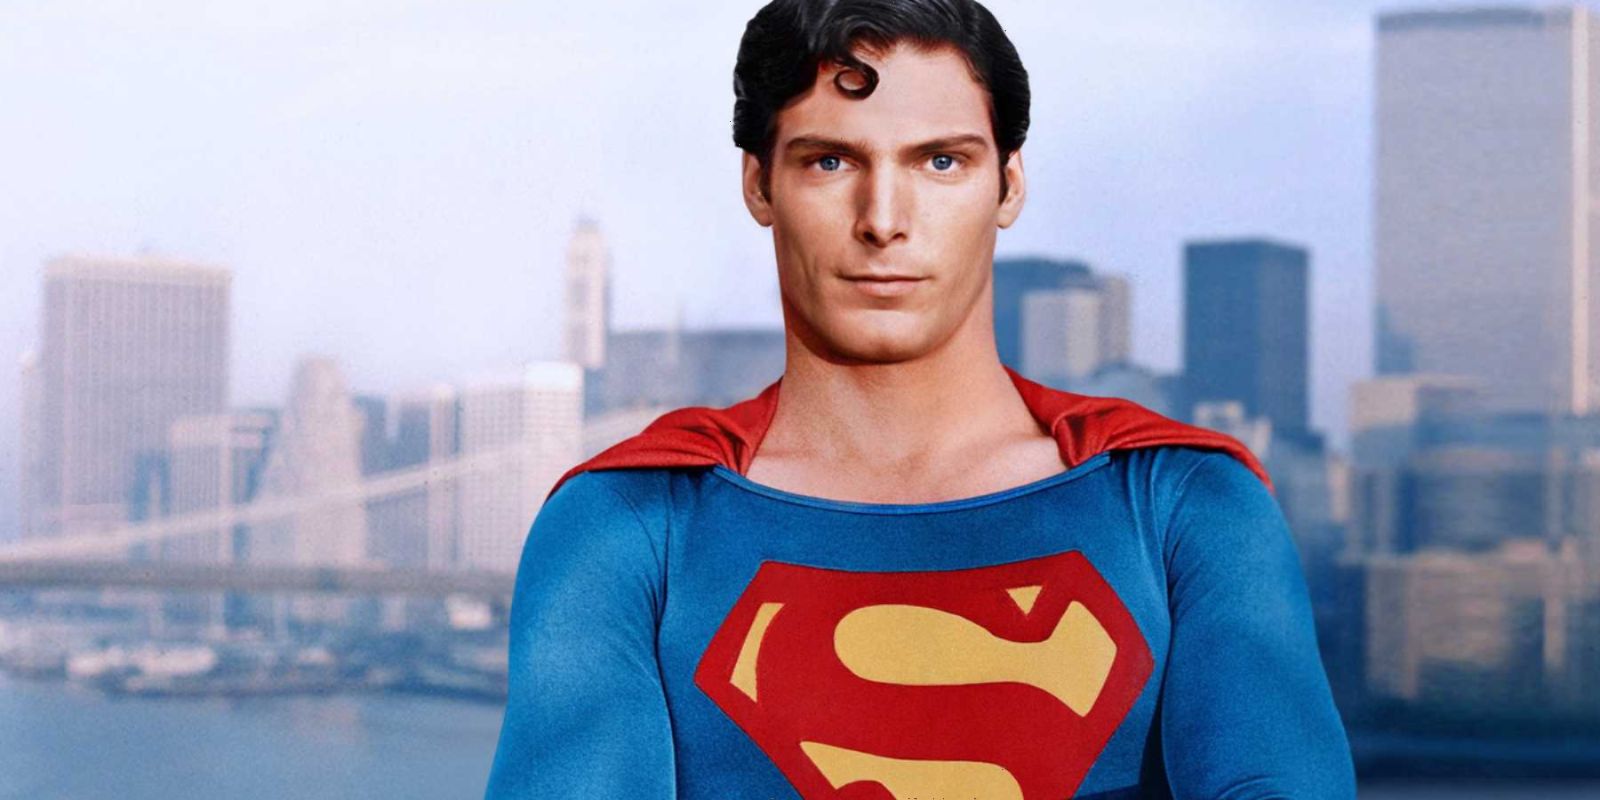 Superman in classic uniform